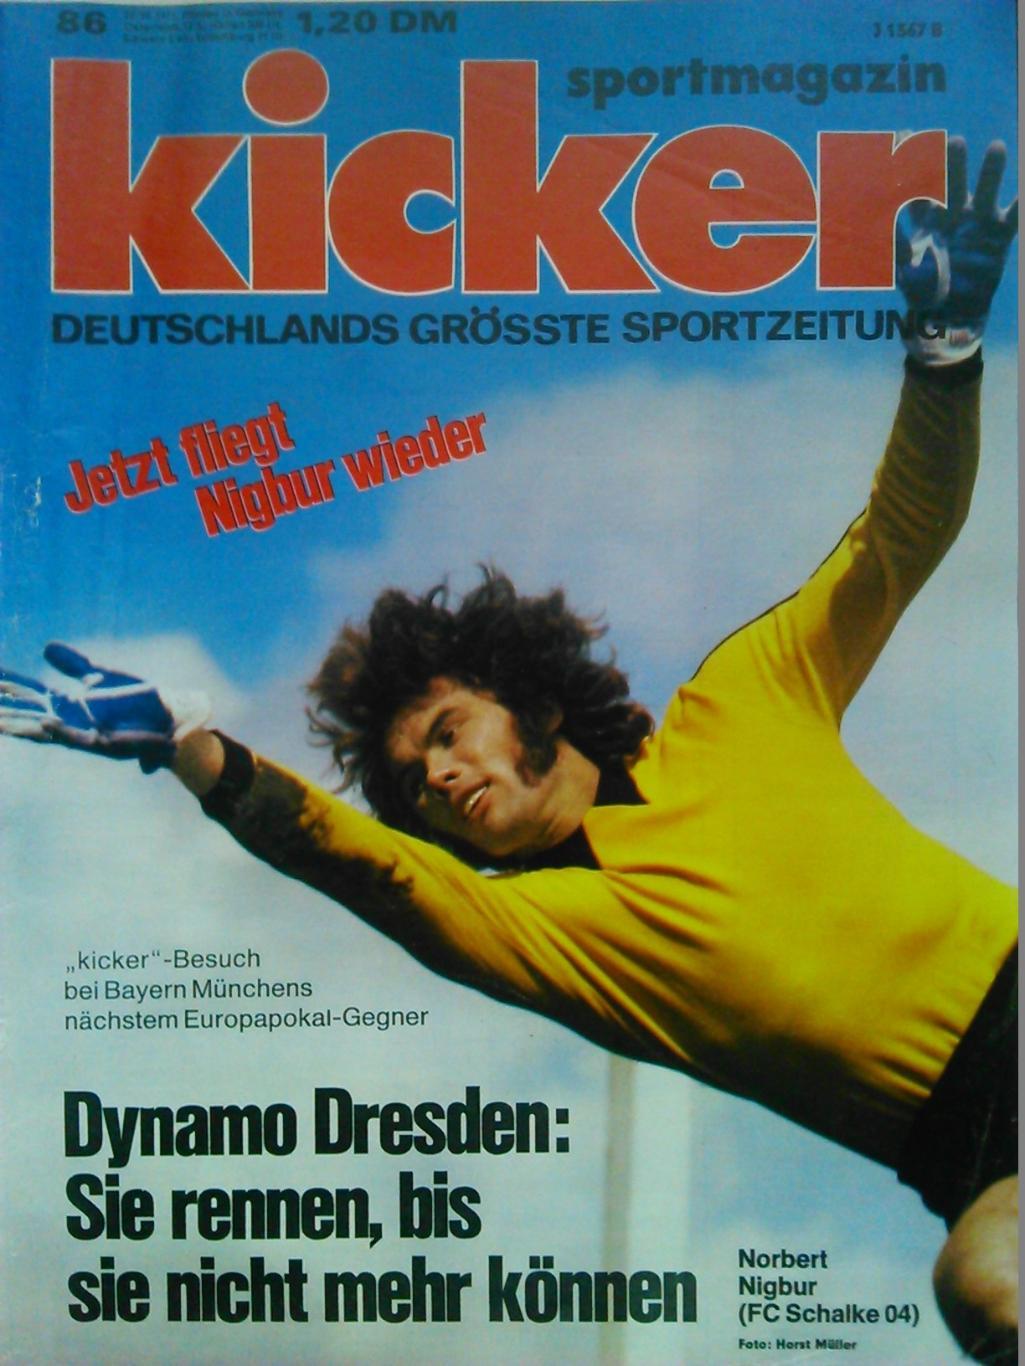 KICKER № 86 1973 (ФРГ) Футбол.ФРГ-ФРАНЦ, Автомагазин ст.80-95. Оптом скидки 46%